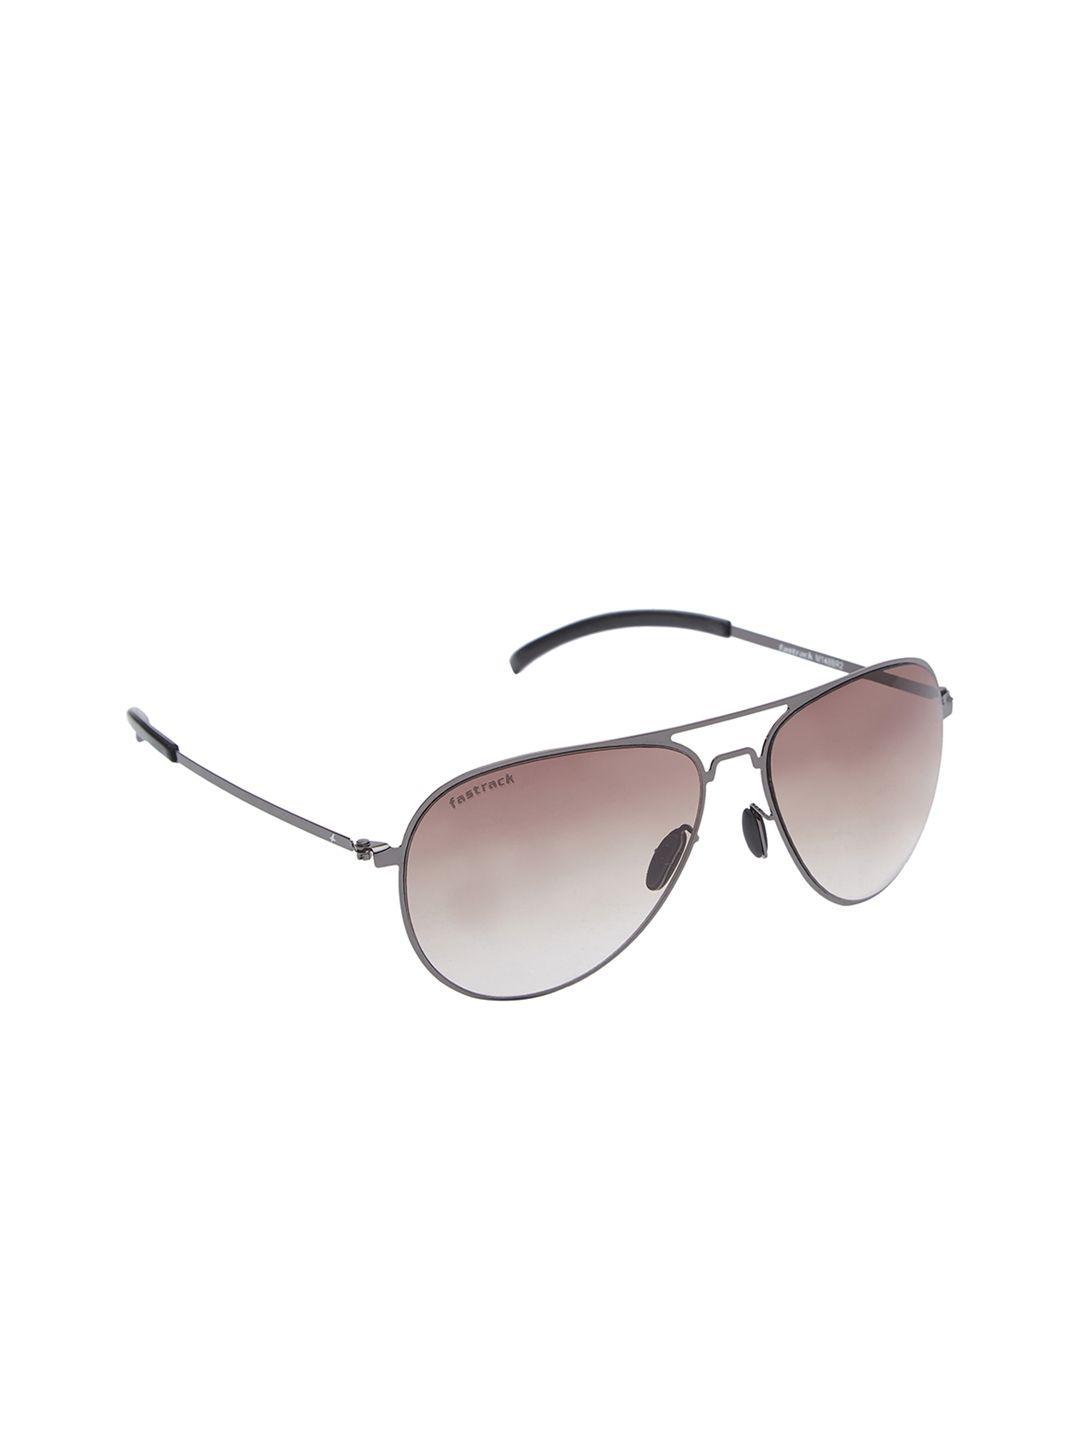 fastrack-men-aviator-uv-protected-sunglasses-m148br2